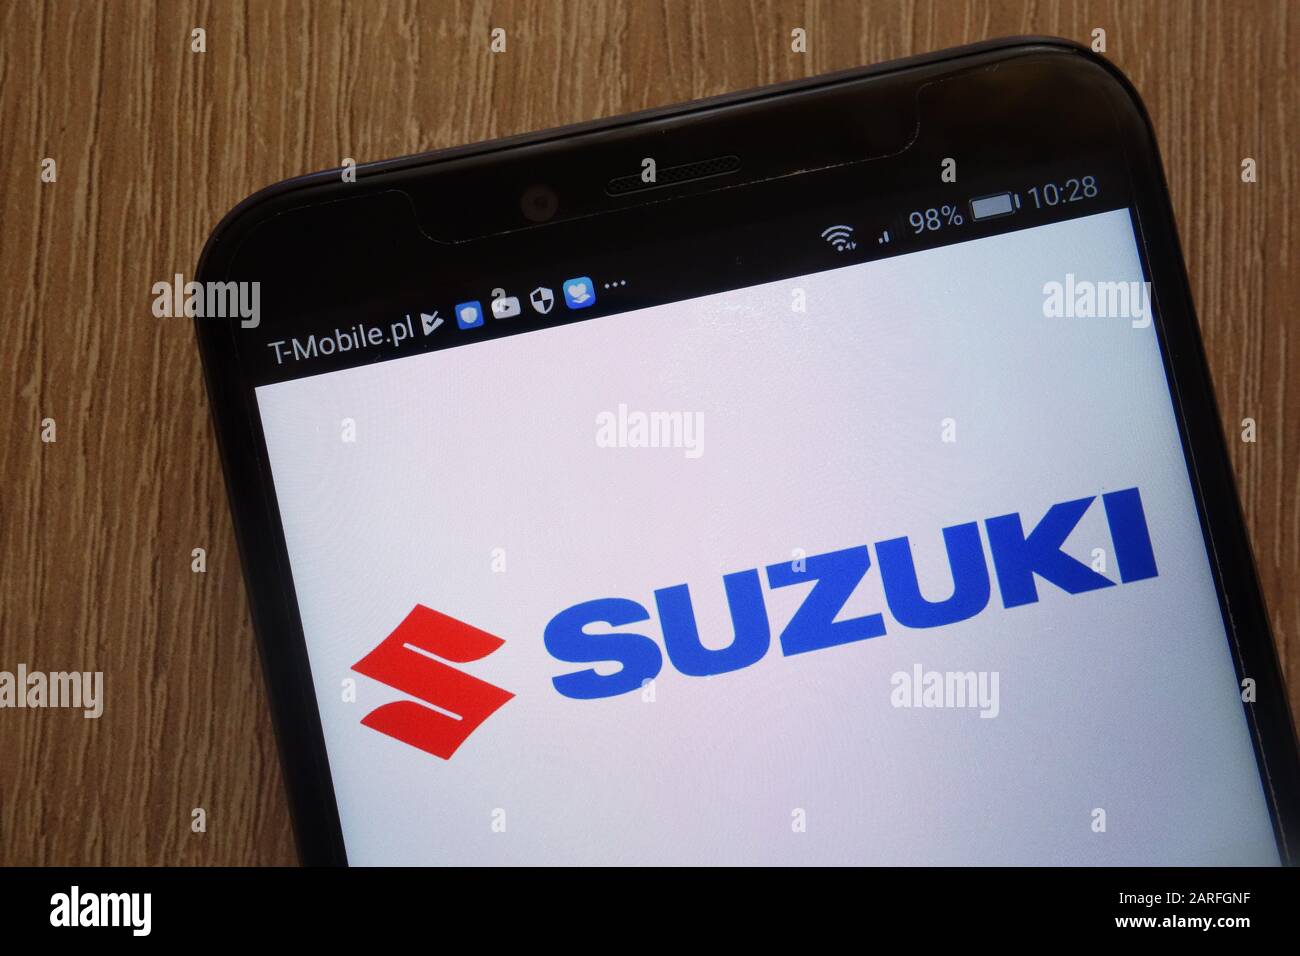 Suzuki logo displayed on a modern smartphone Stock Photo